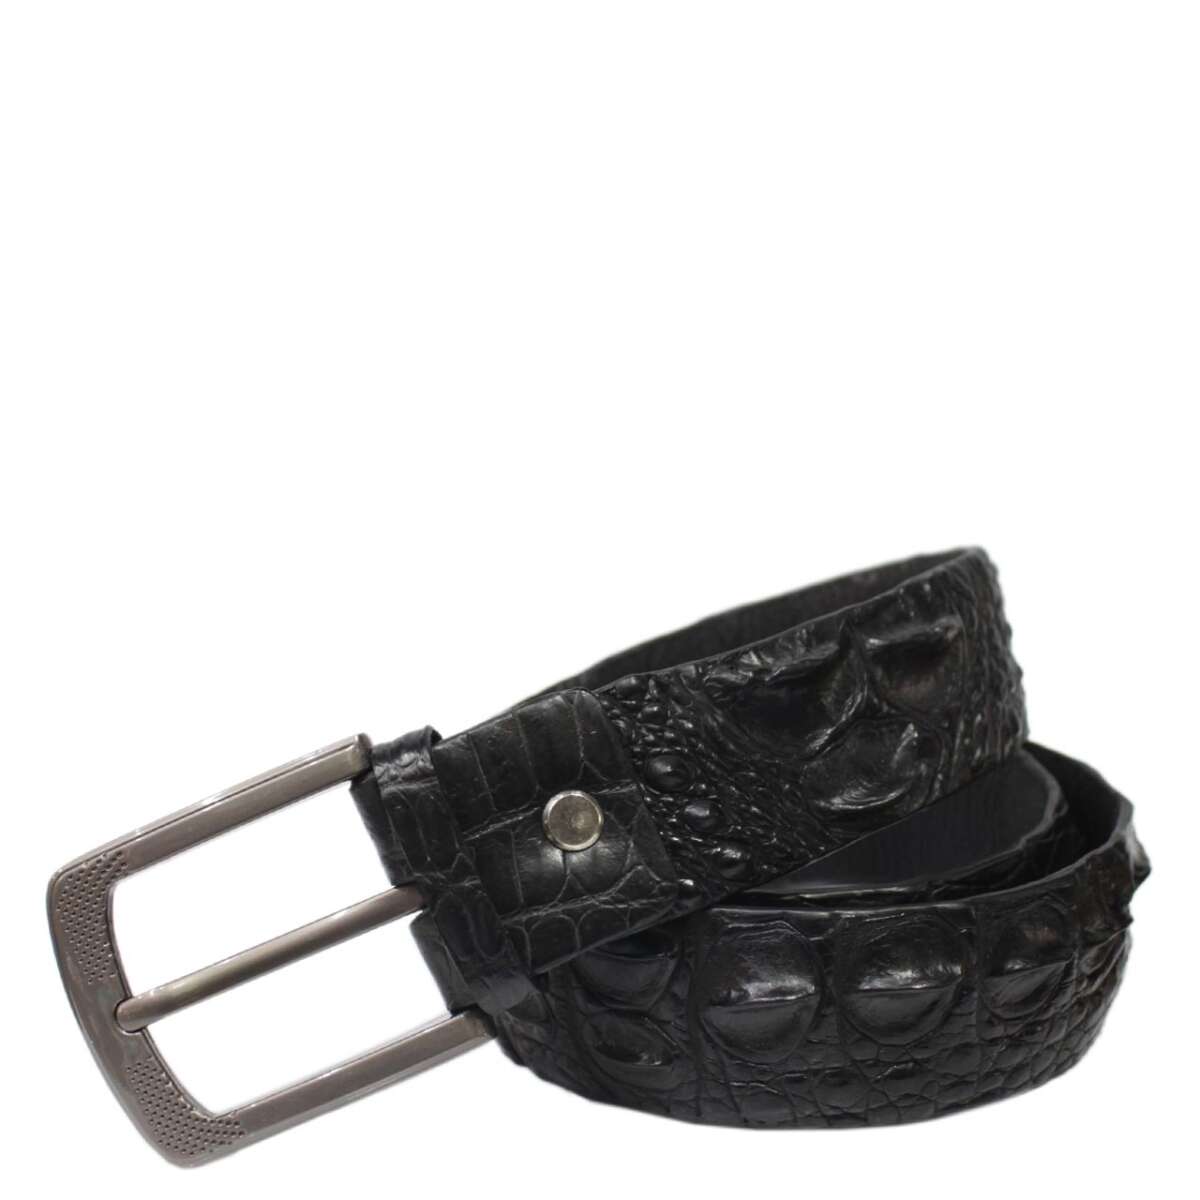 Crocodile leather belt S604c